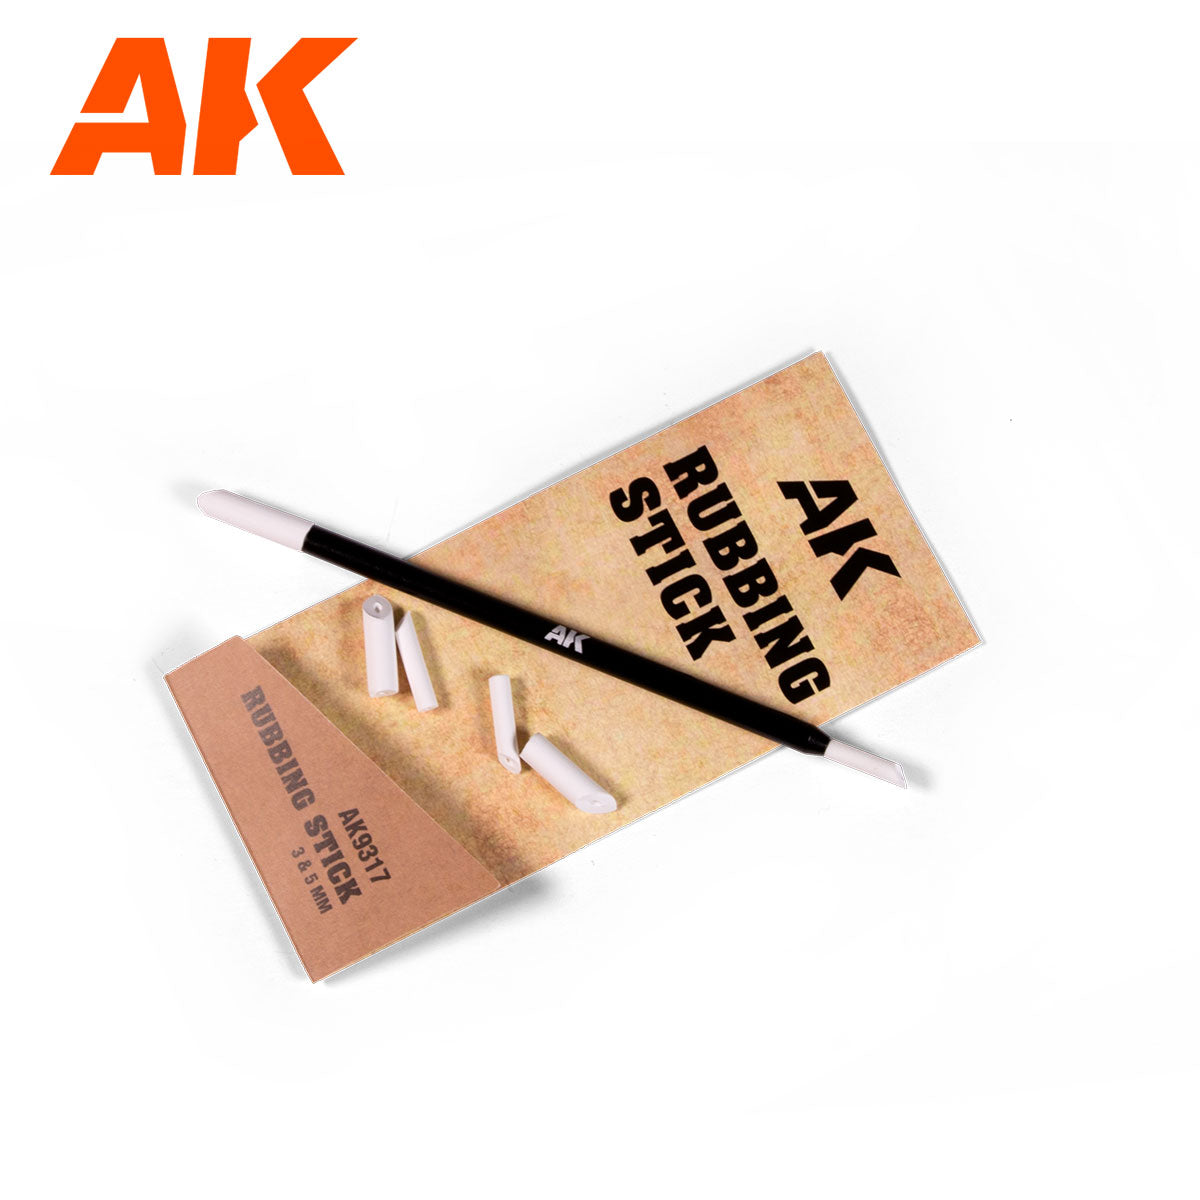 AK Interactive Rubbing Stick AK9317 - Loaded Dice Barry Vale of Glamorgan CF64 3HD